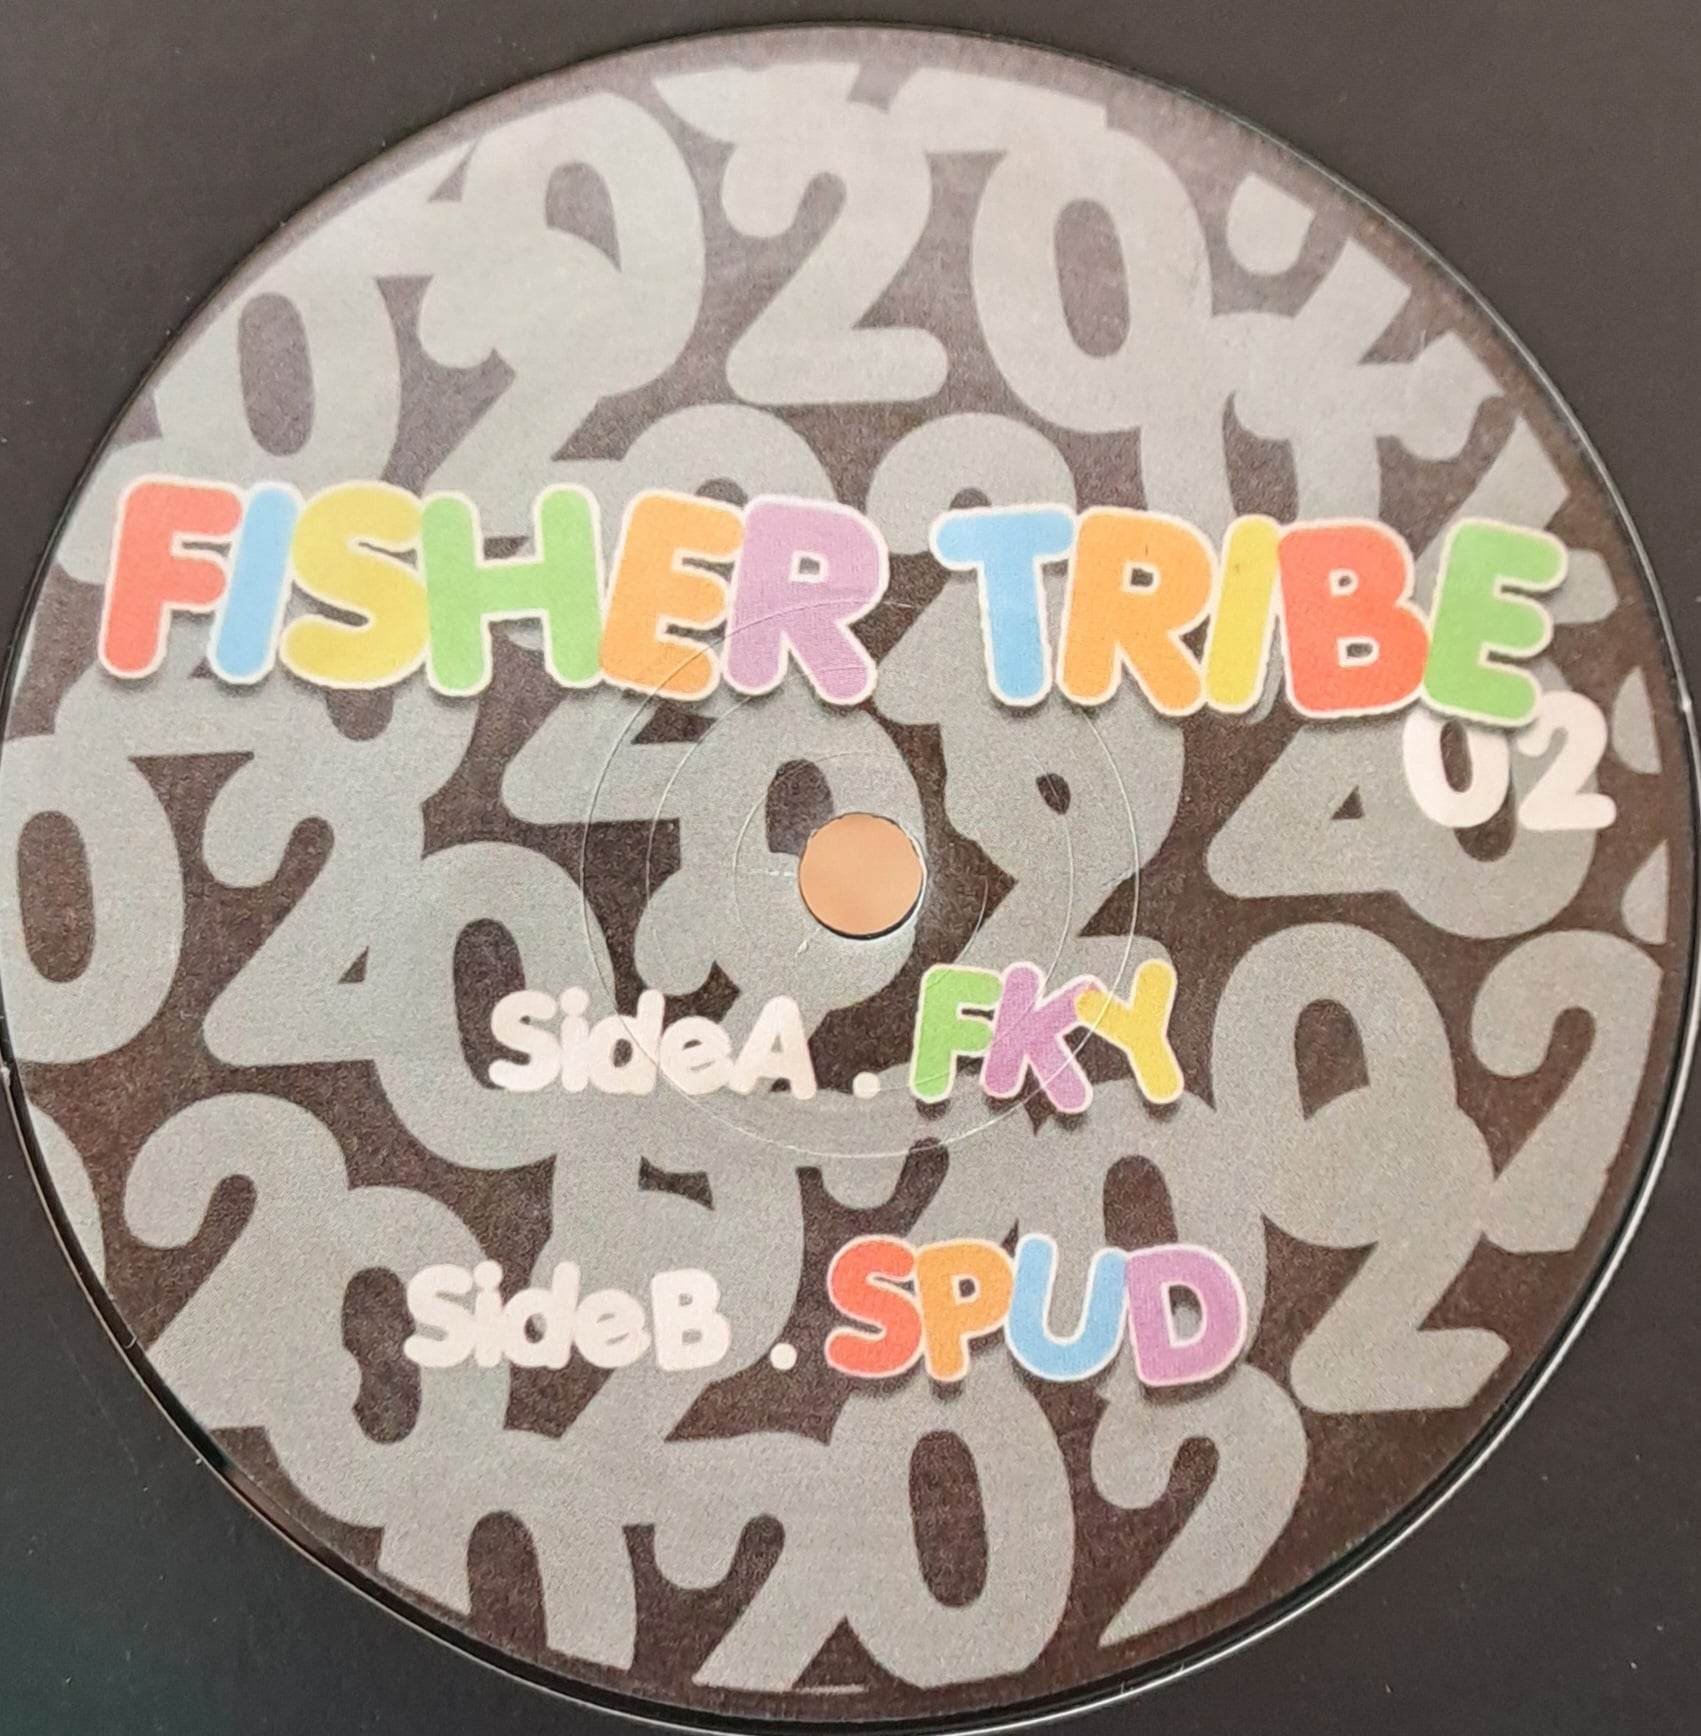 Fisher Tribe 002 - vinyle freetekno